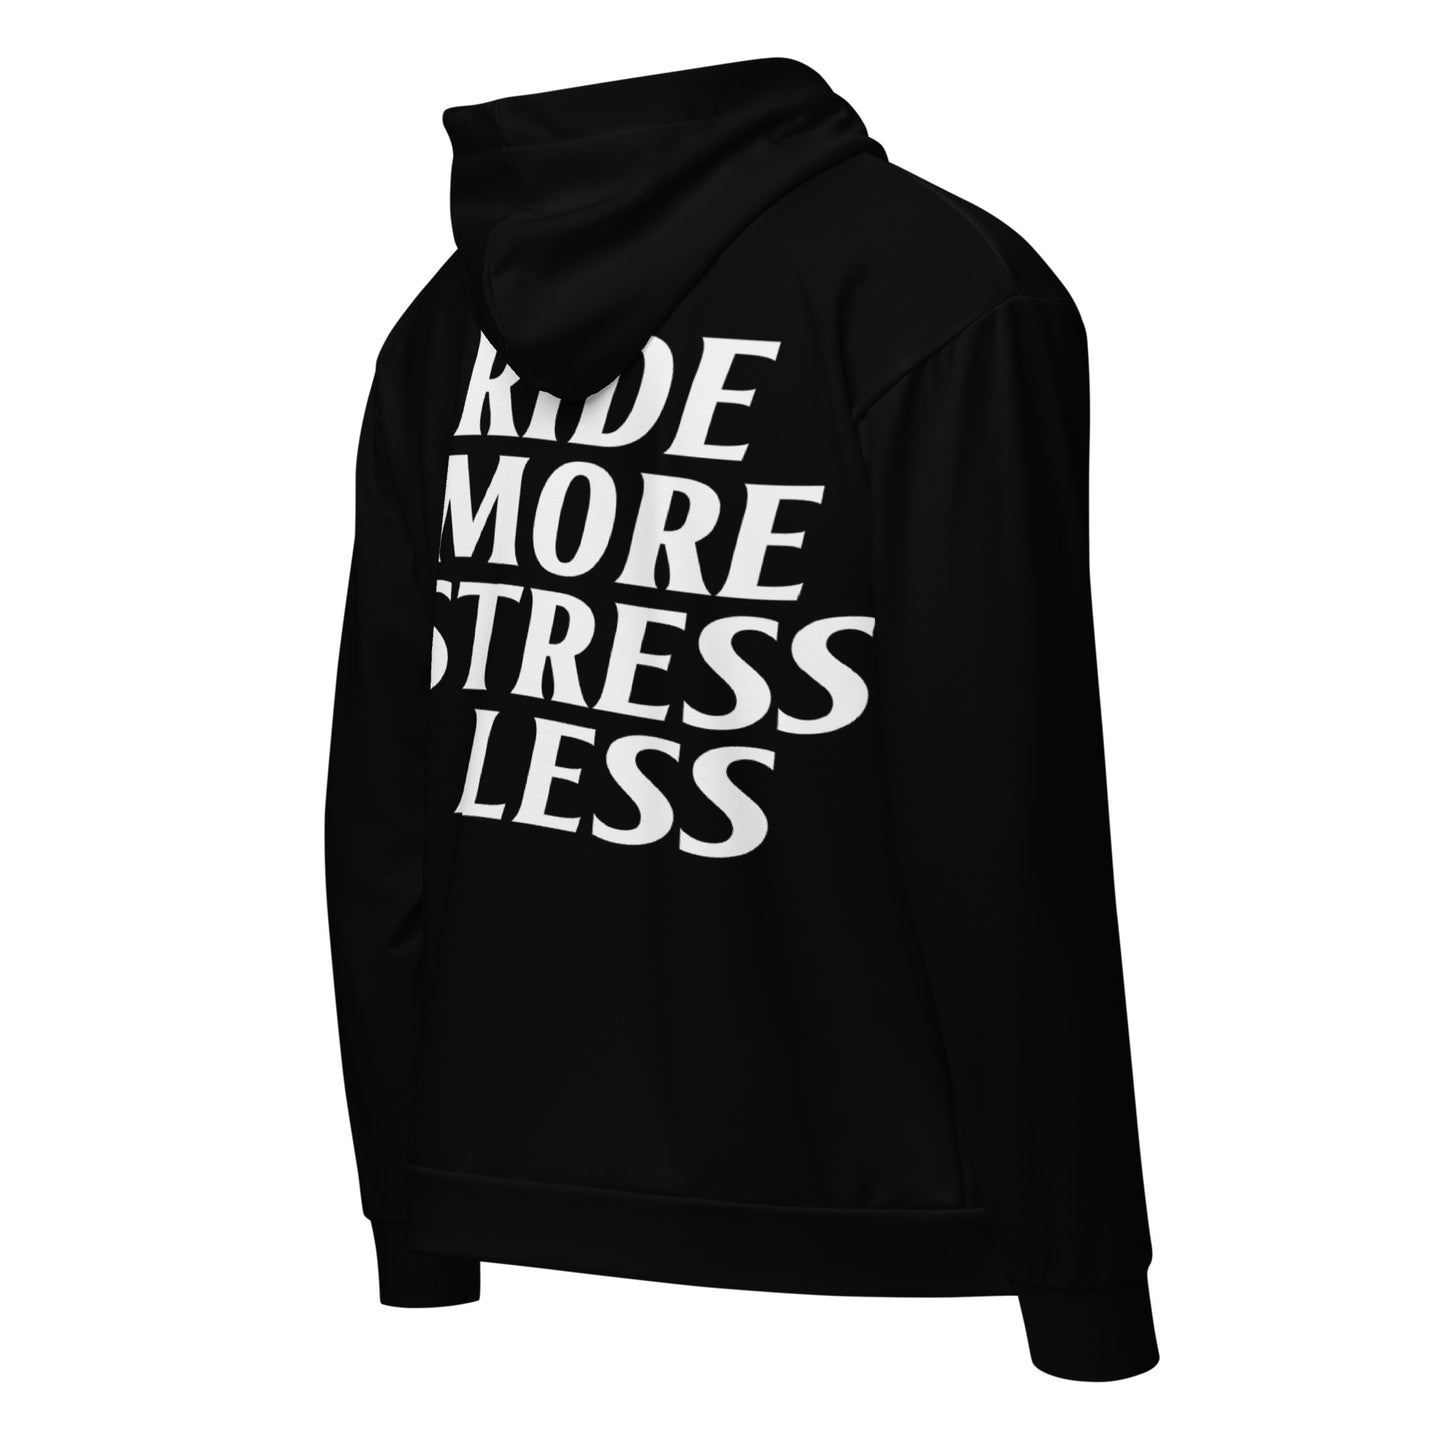 RIDE MORE STRESS LESS Unisex zip hoodie